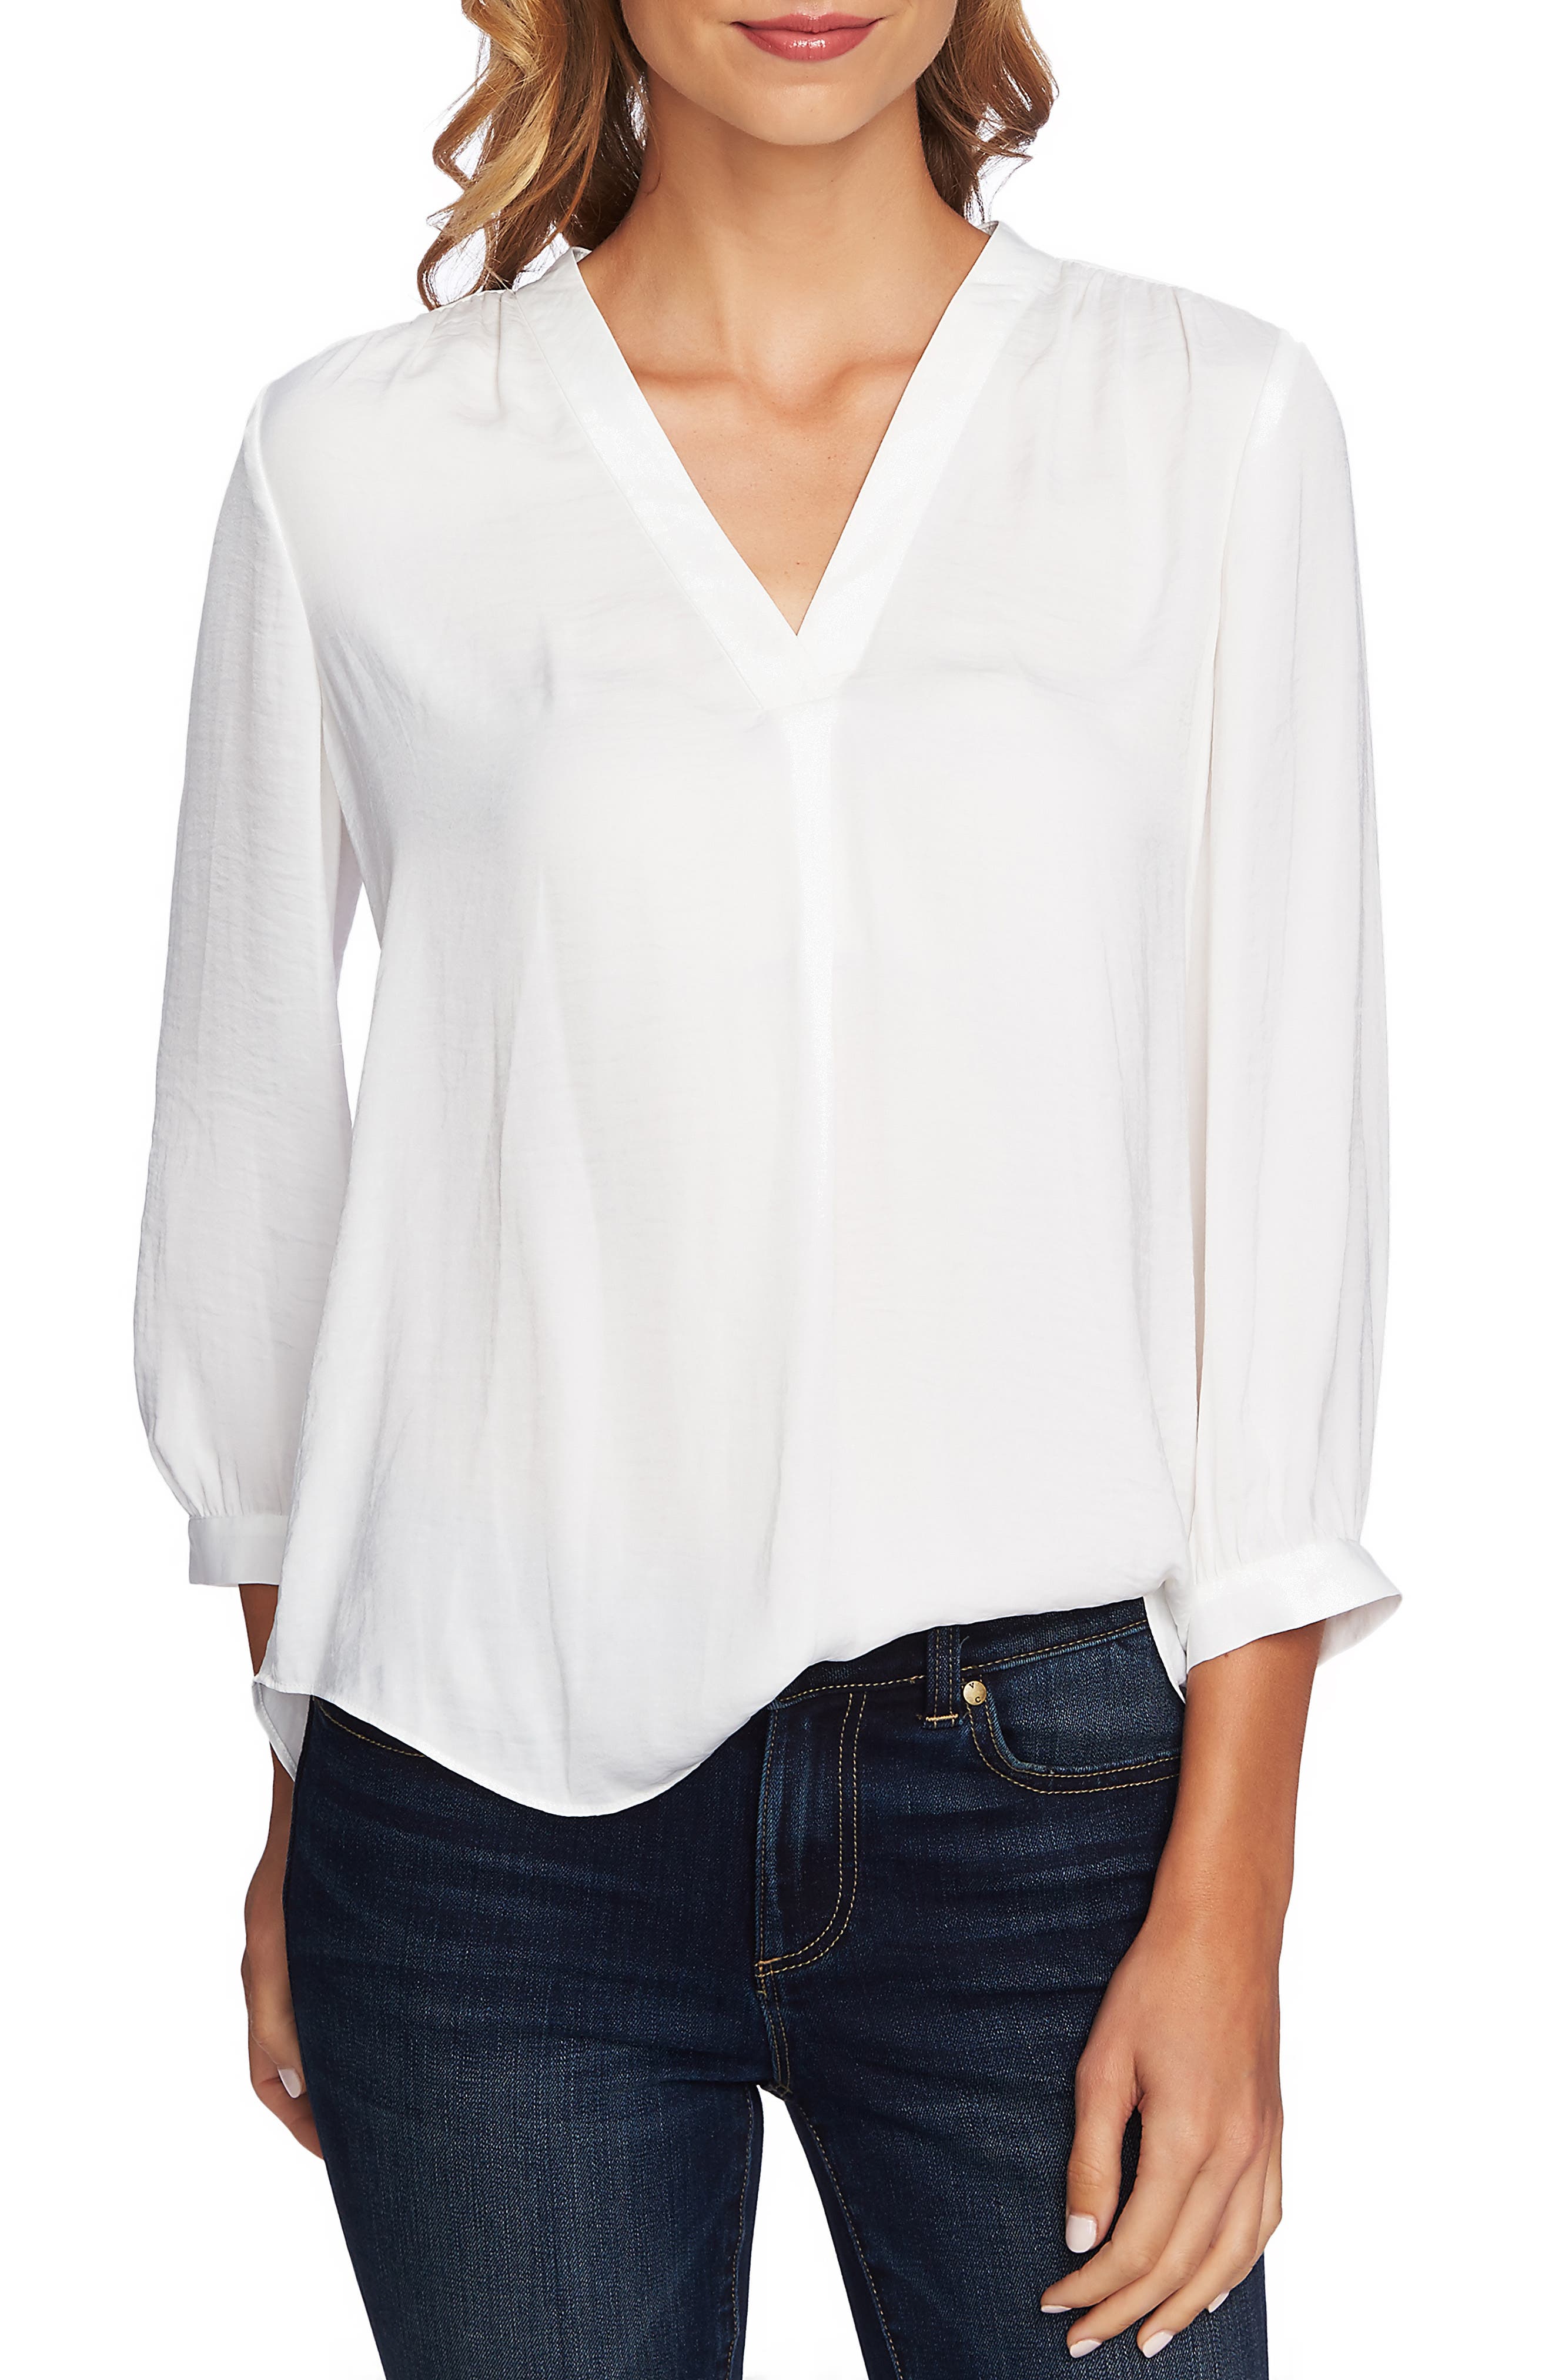 Top Elegant New Women Business Casual Long Sleeve Shirt Black White Blouse 